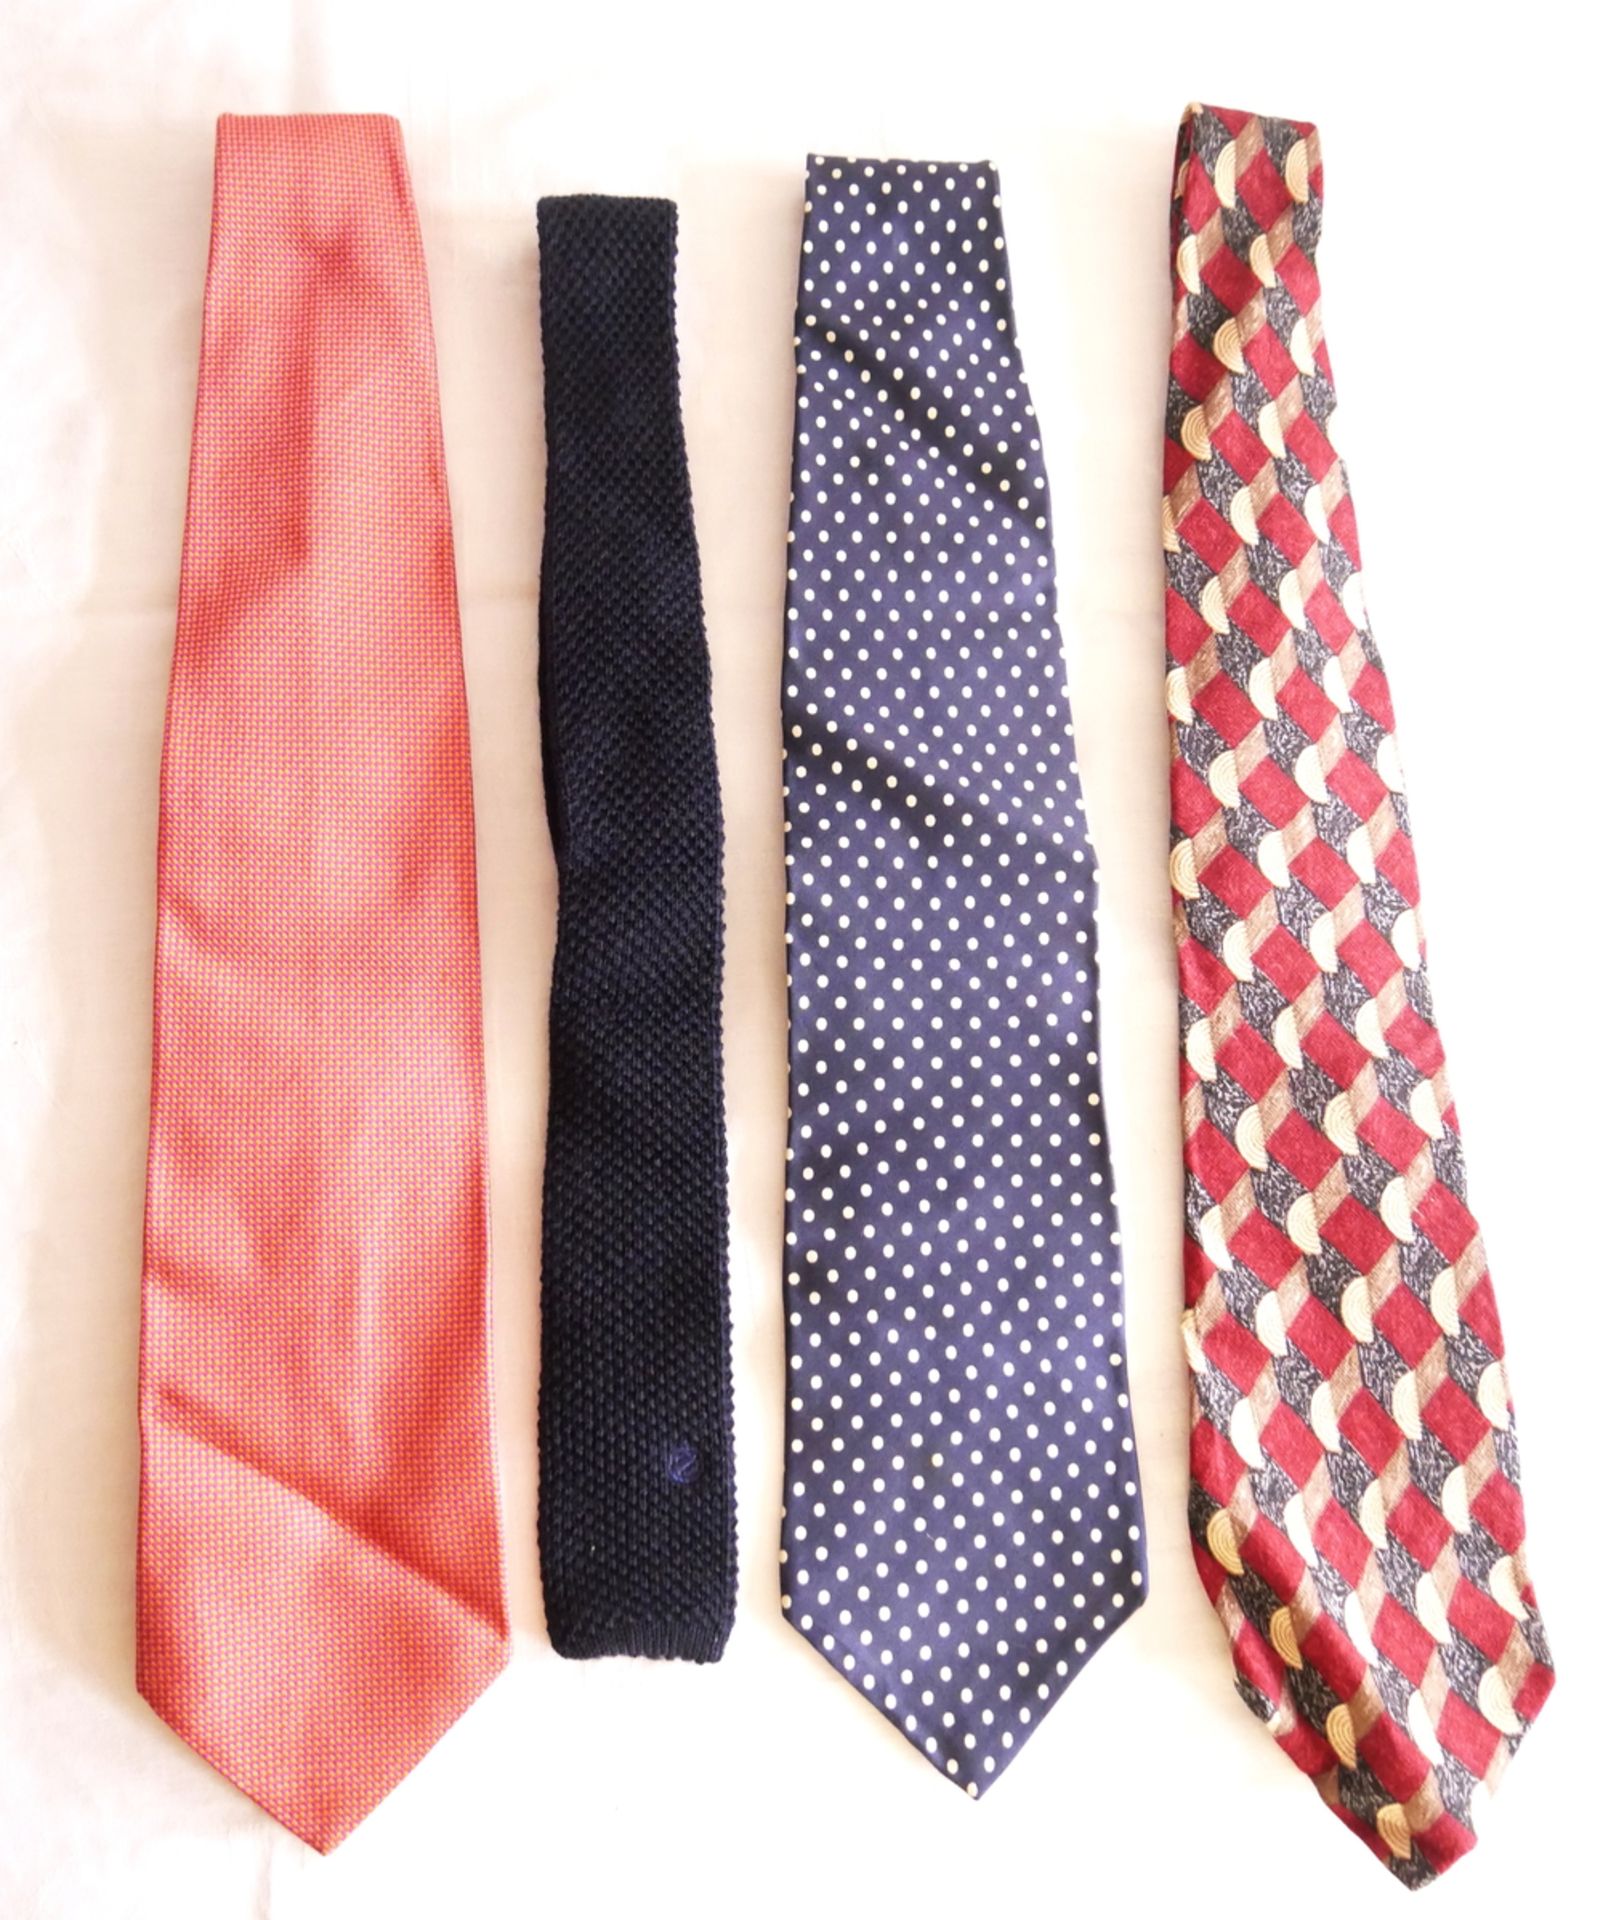 4 Krawatten, Ermenegildo Zegna, verschiedene Modelle. Guter getragener Zustand.